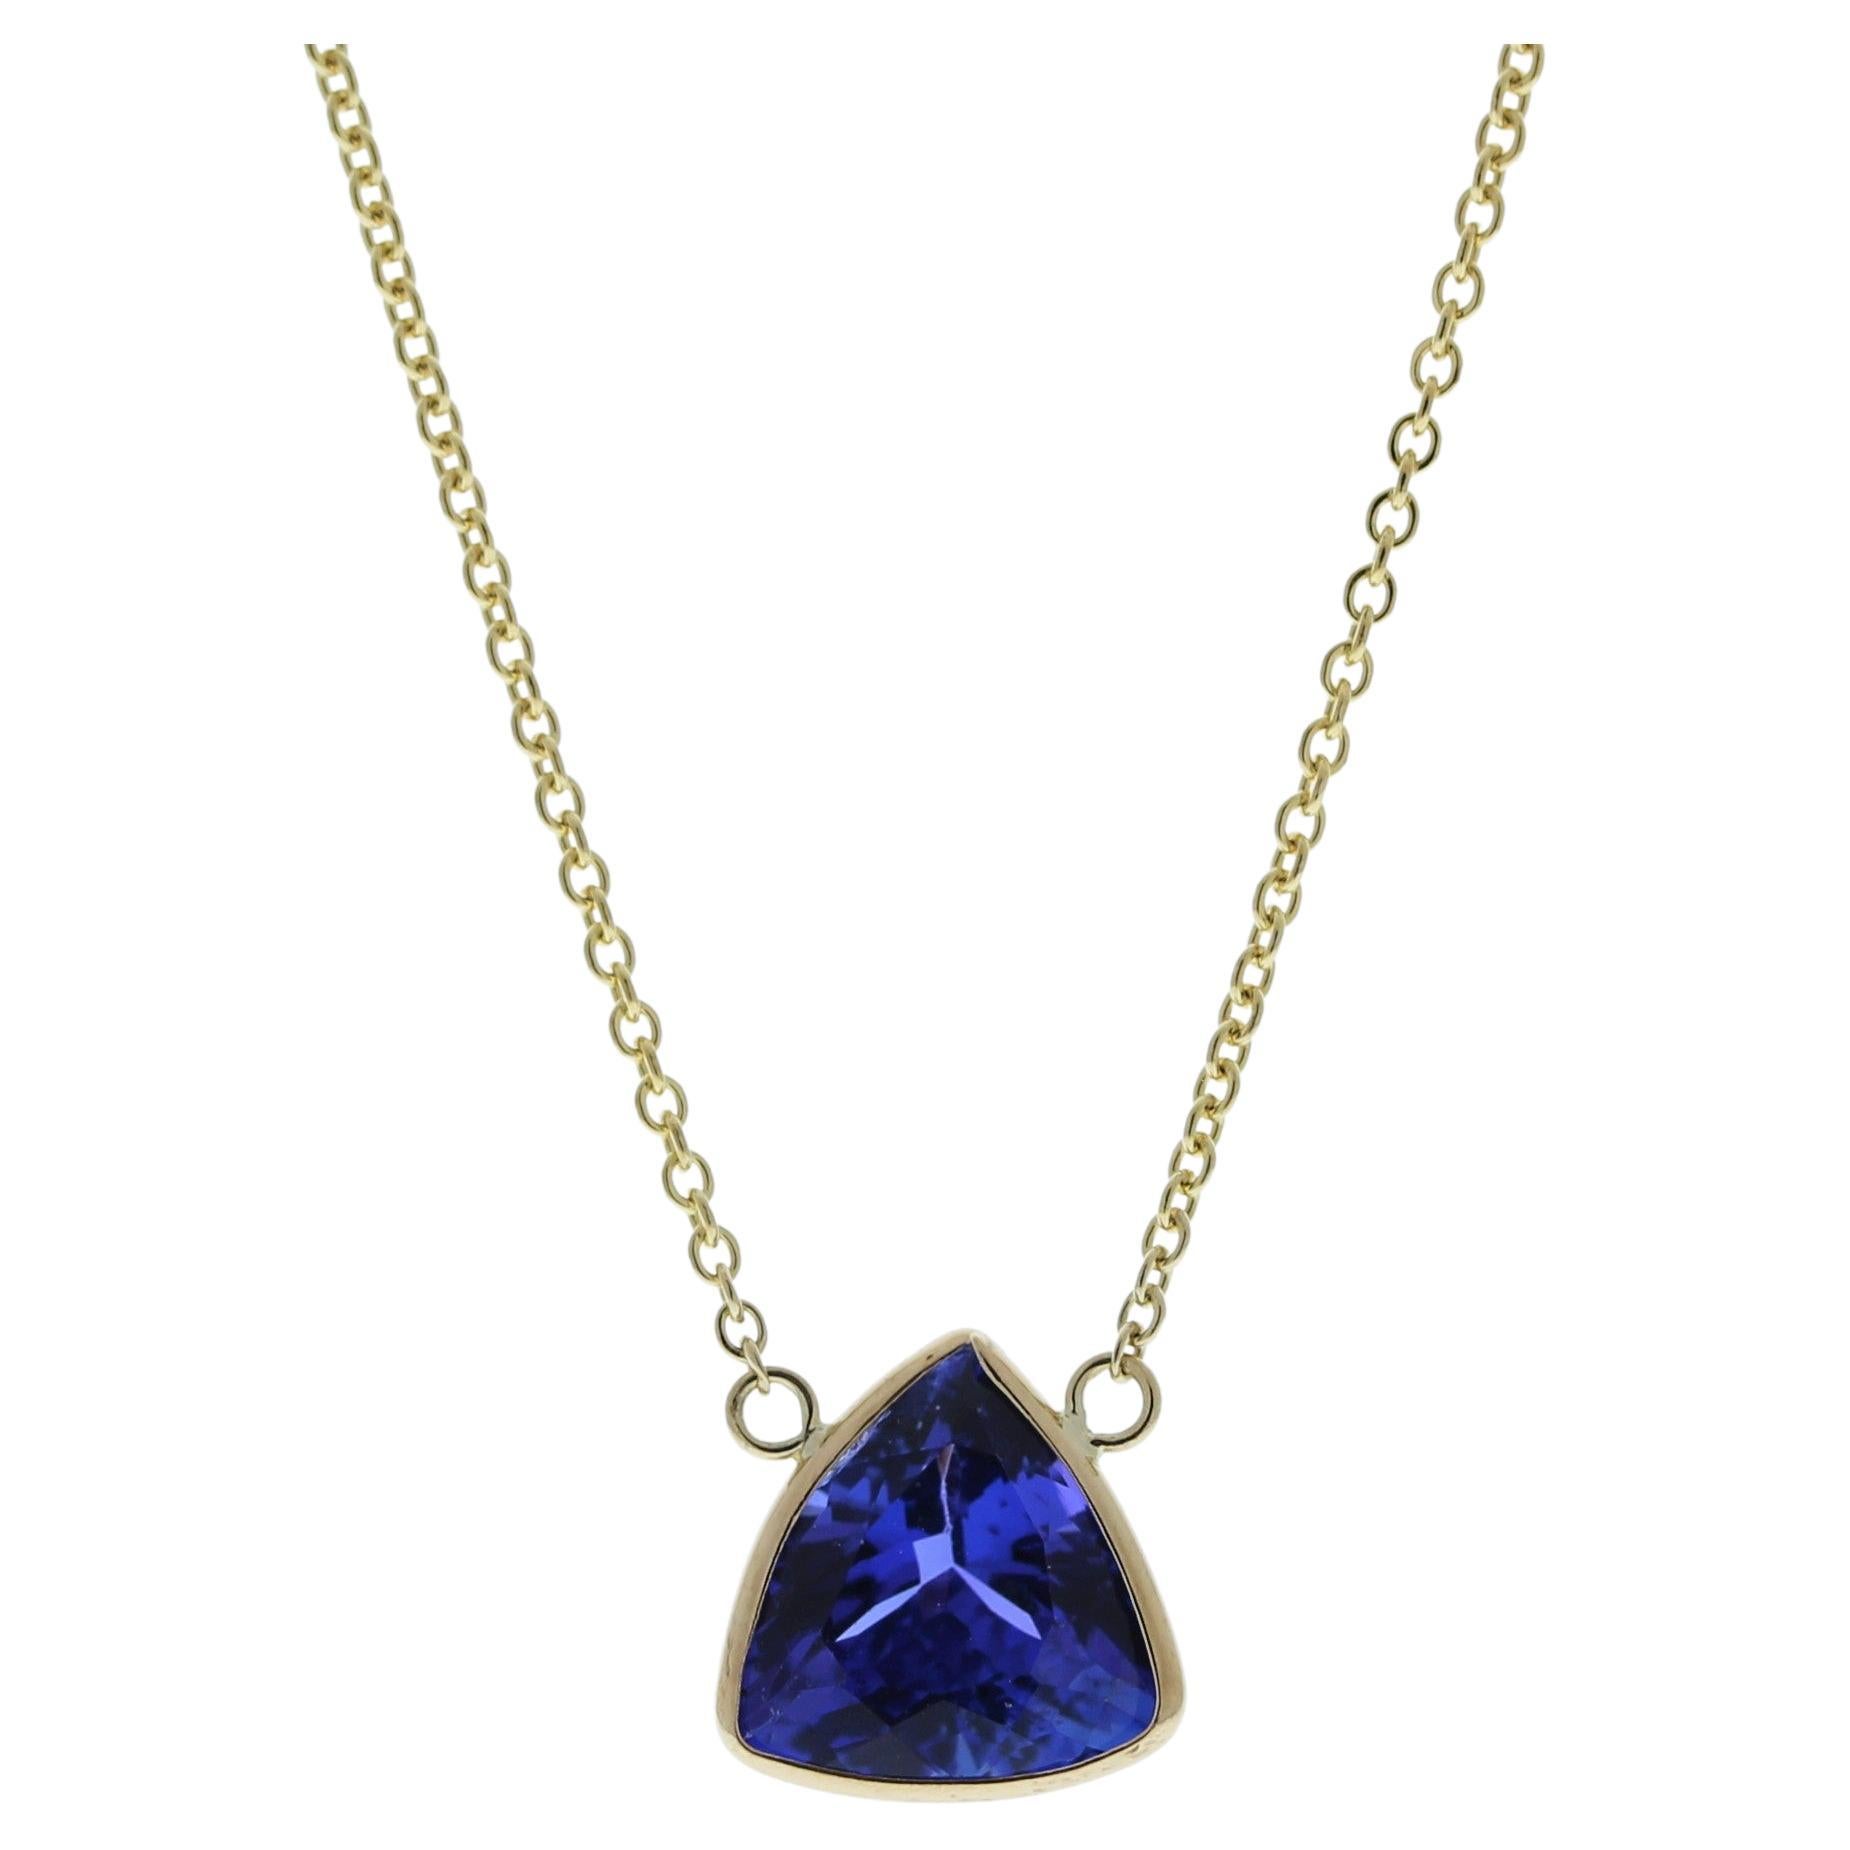 3.11 Carat Trilliant Tanzanite Blue Fashion Necklaces In 14k Yellow Gold